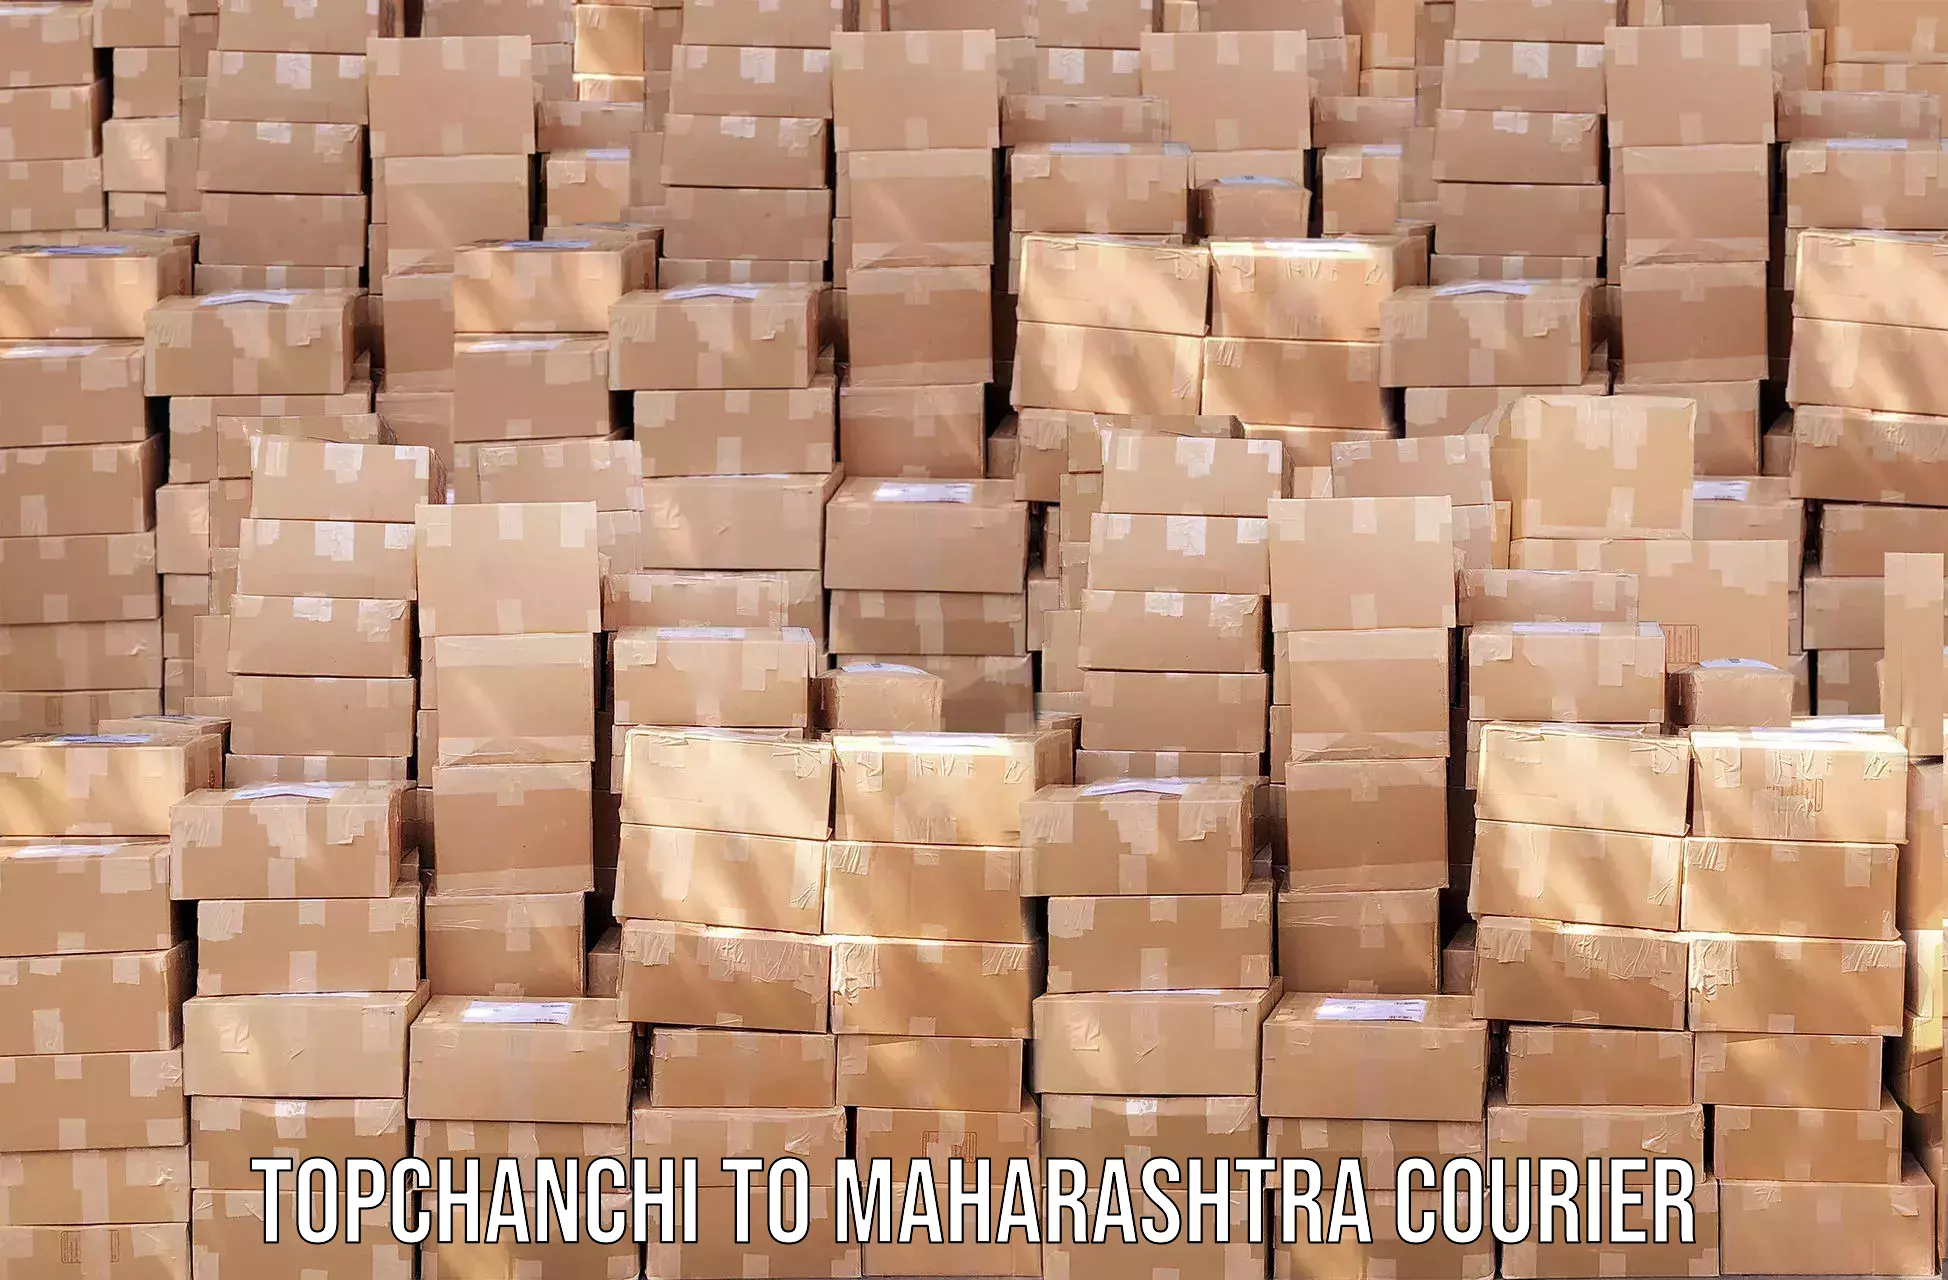 Pharmaceutical courier Topchanchi to Mahabaleshwar